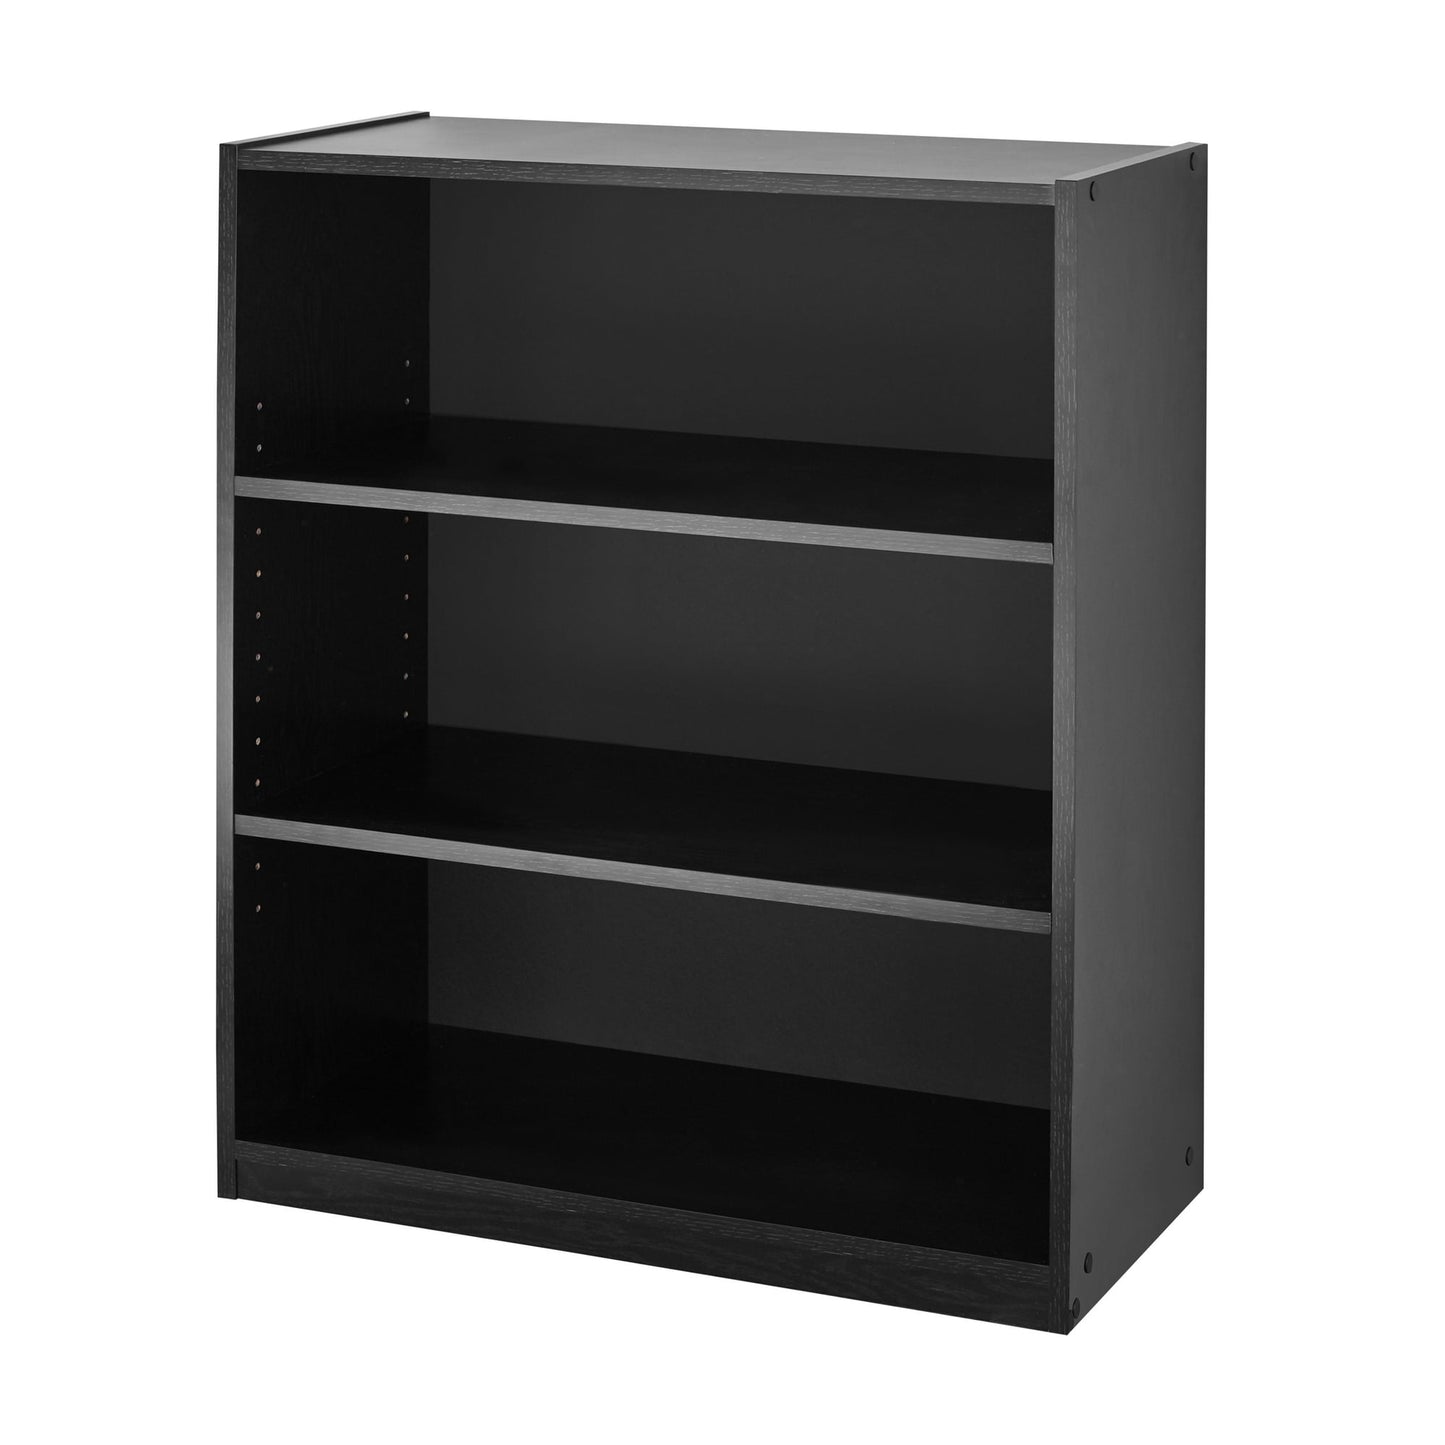 3-Shelf Bookcase with Adjustable Shelves